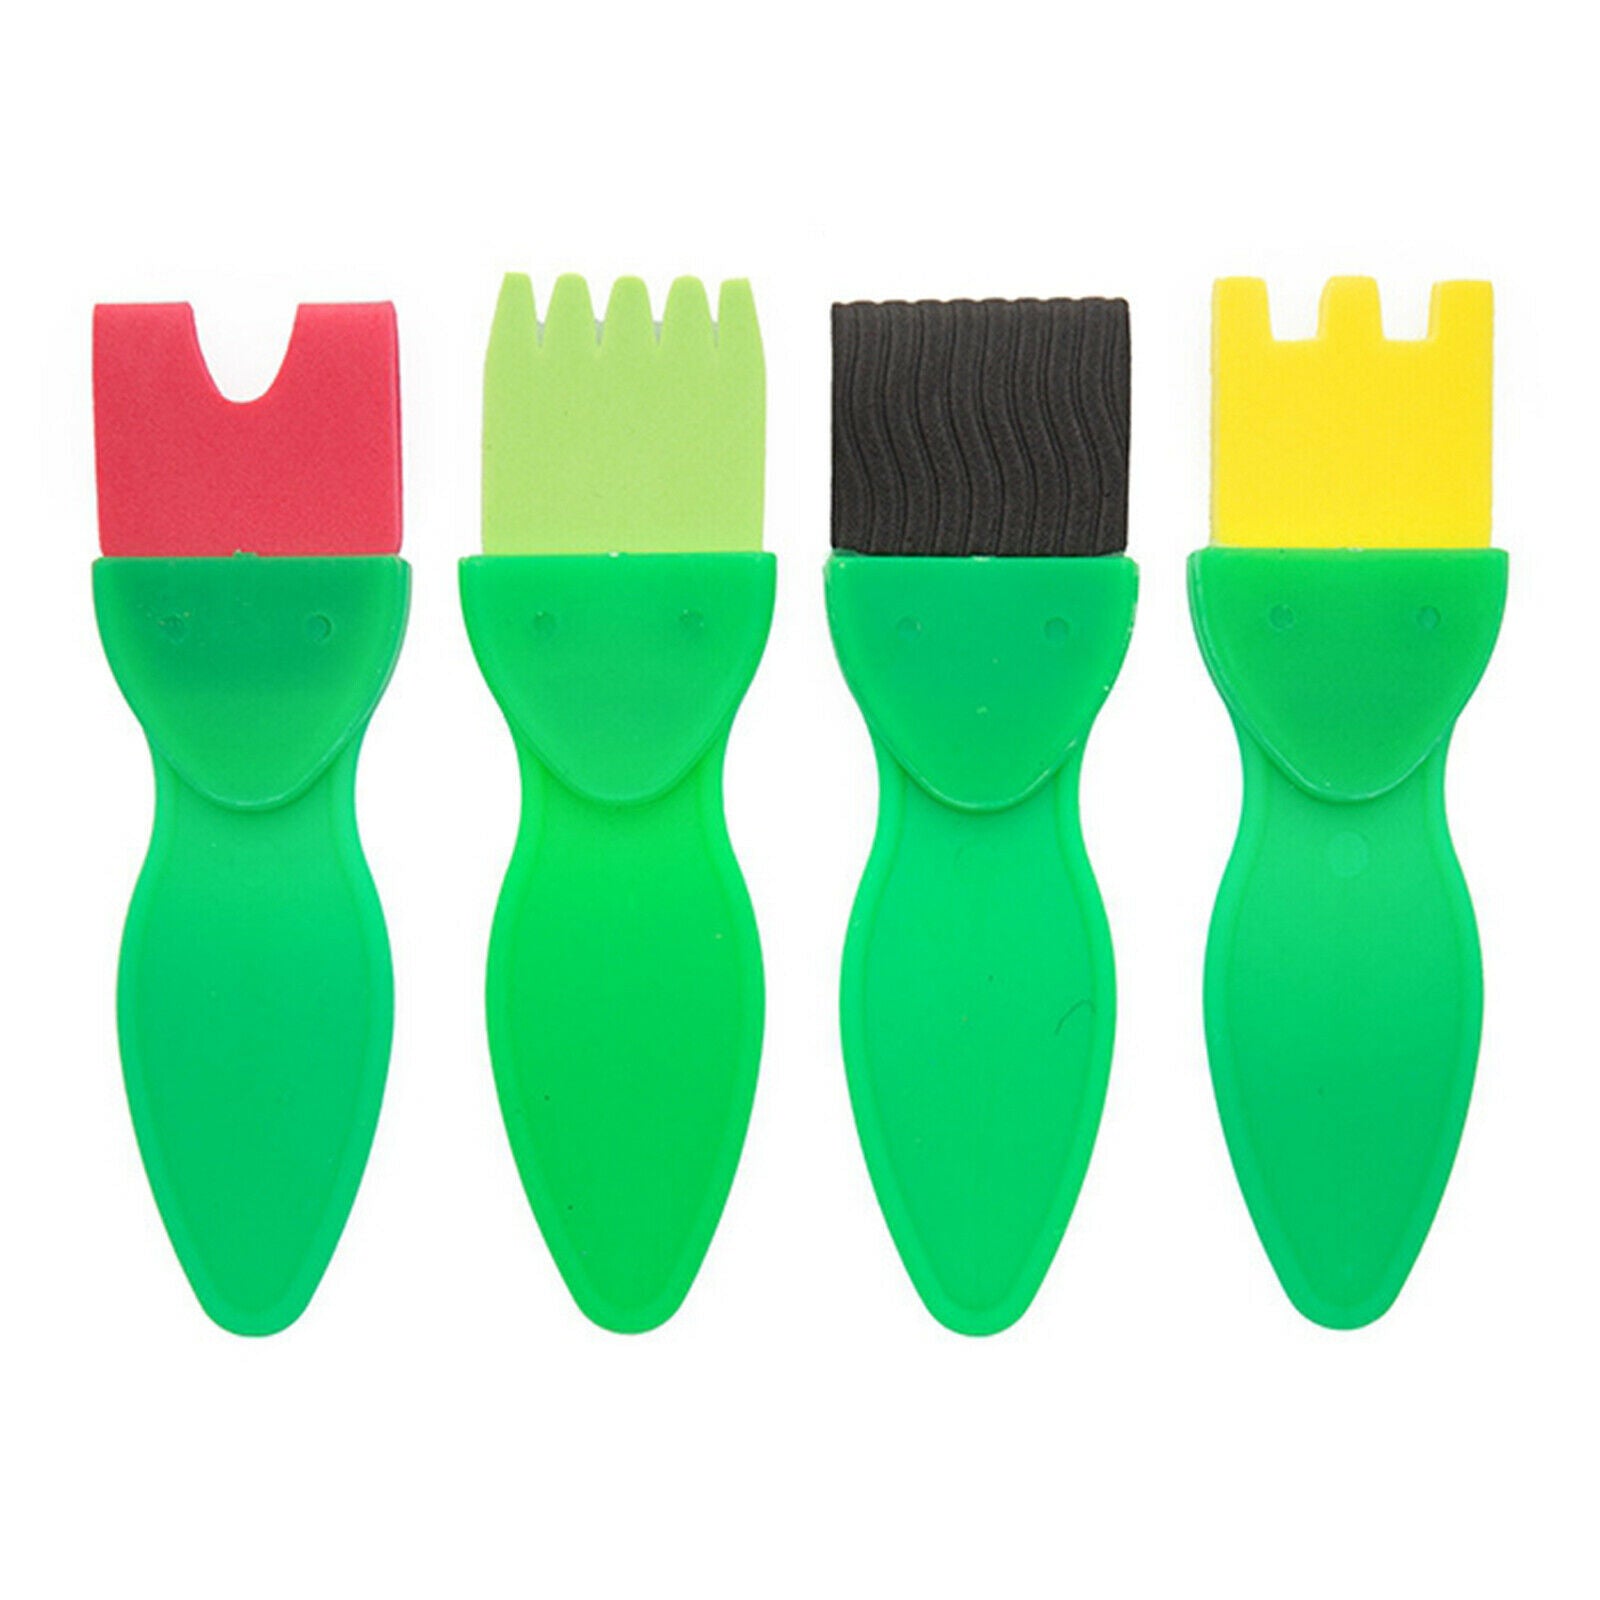 Kids Early Learning Sponge Painting Brushes Kit, 36pcs Paint Craft Brushes